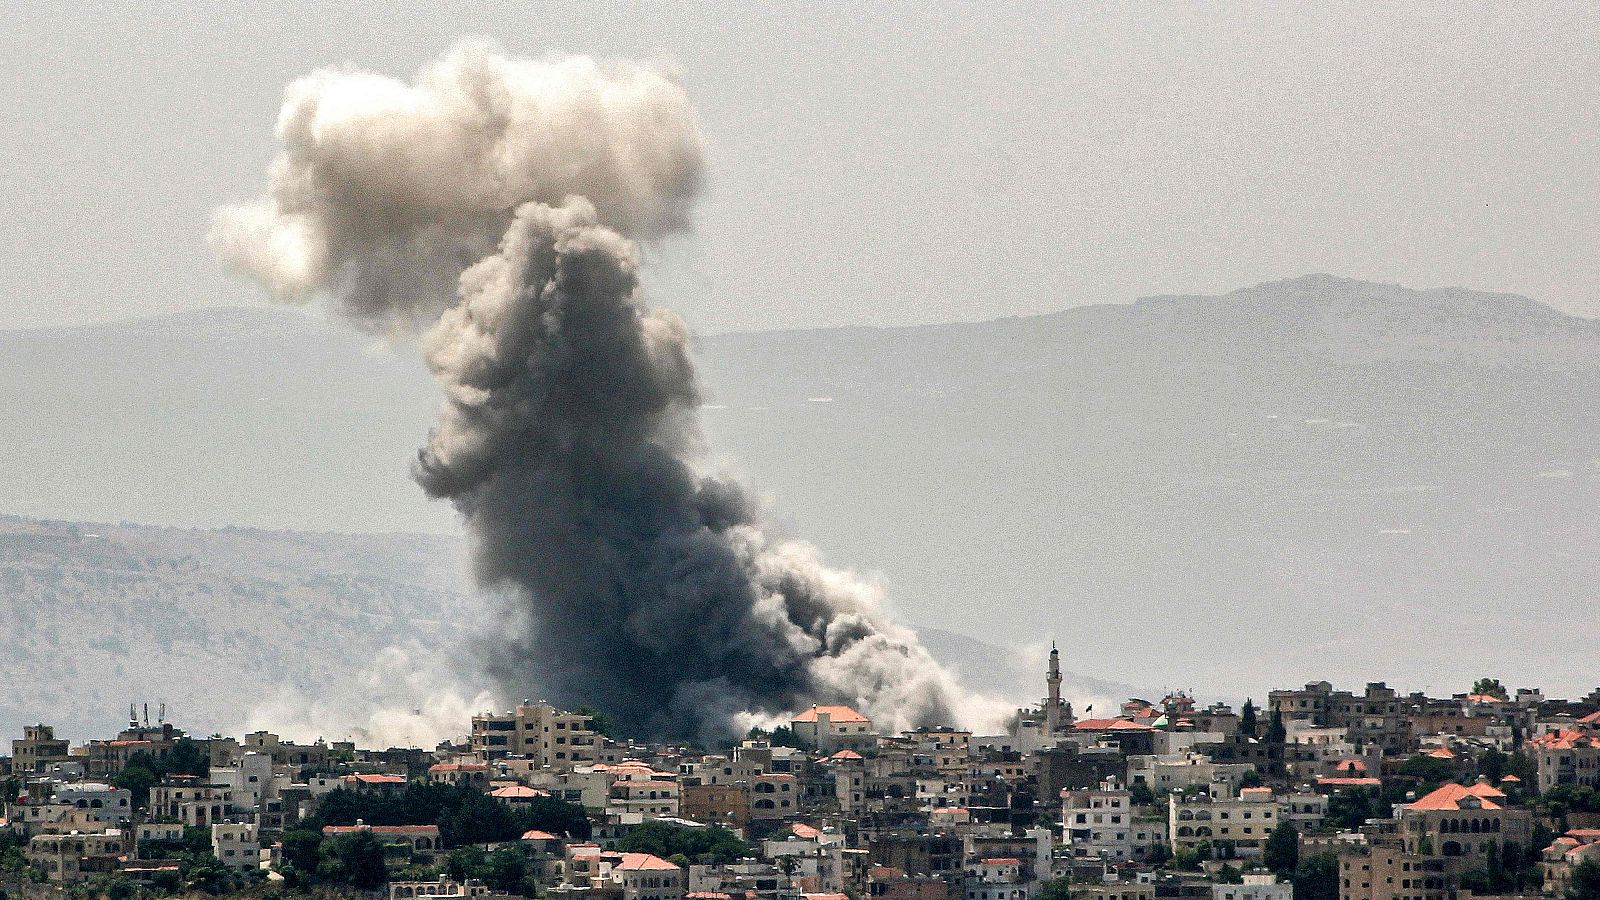 Murieron 11 gazatíes en un bombardeo israelí contra -Agencia Carabobeña de Noticias – ACN – Noticias internacionales